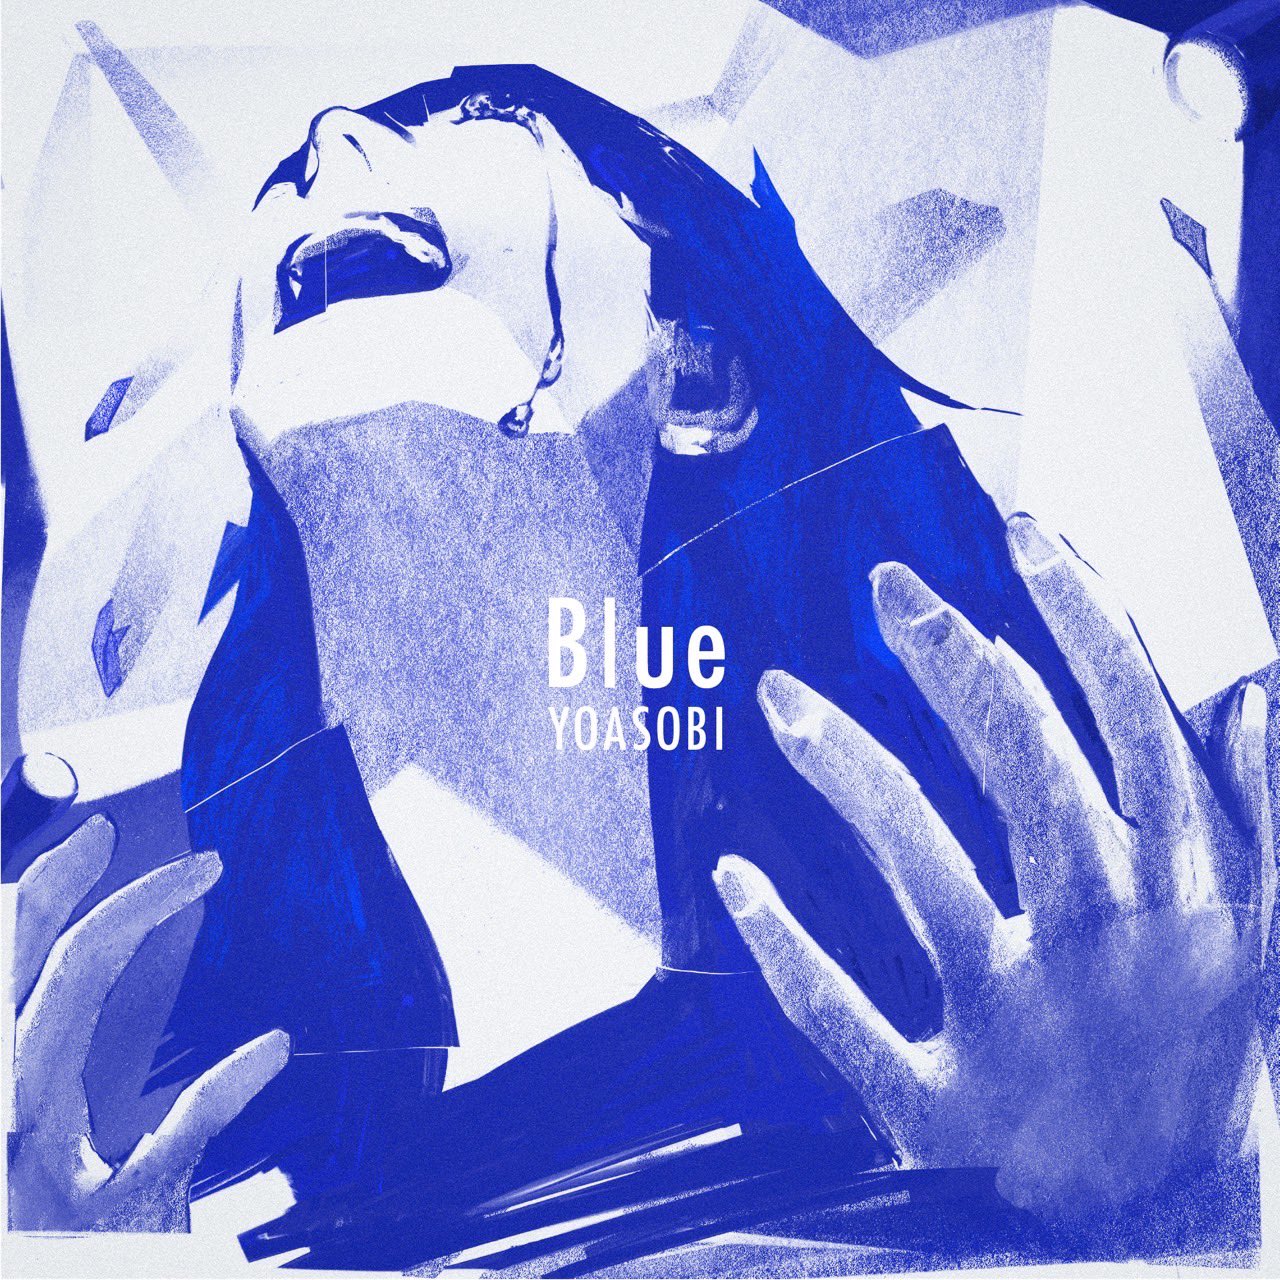 YOASOBI - Blue English version